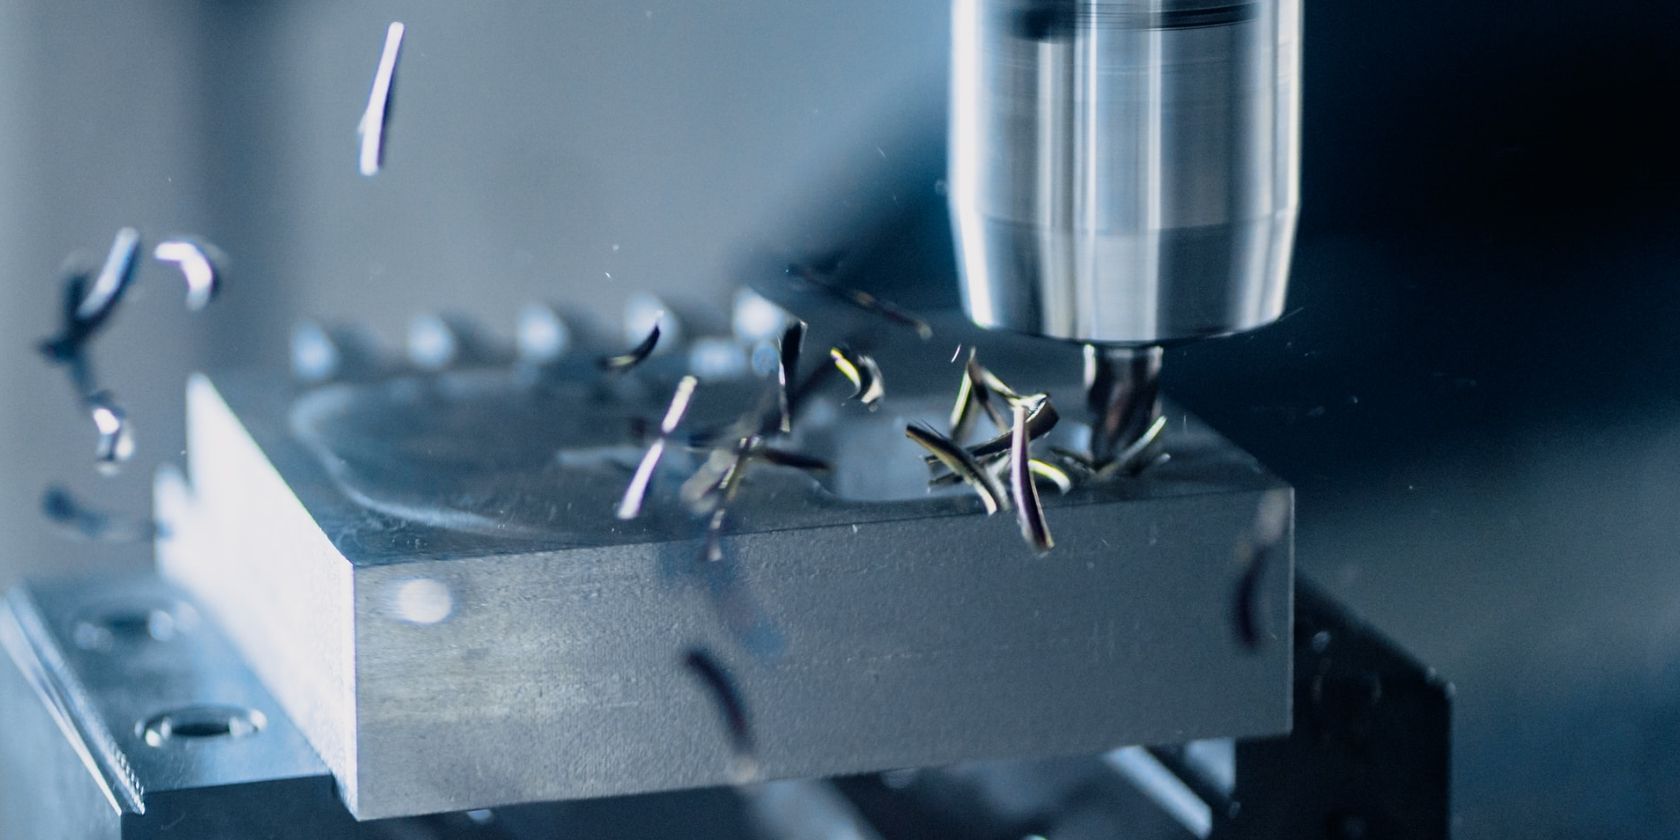 CNC machine milling metal